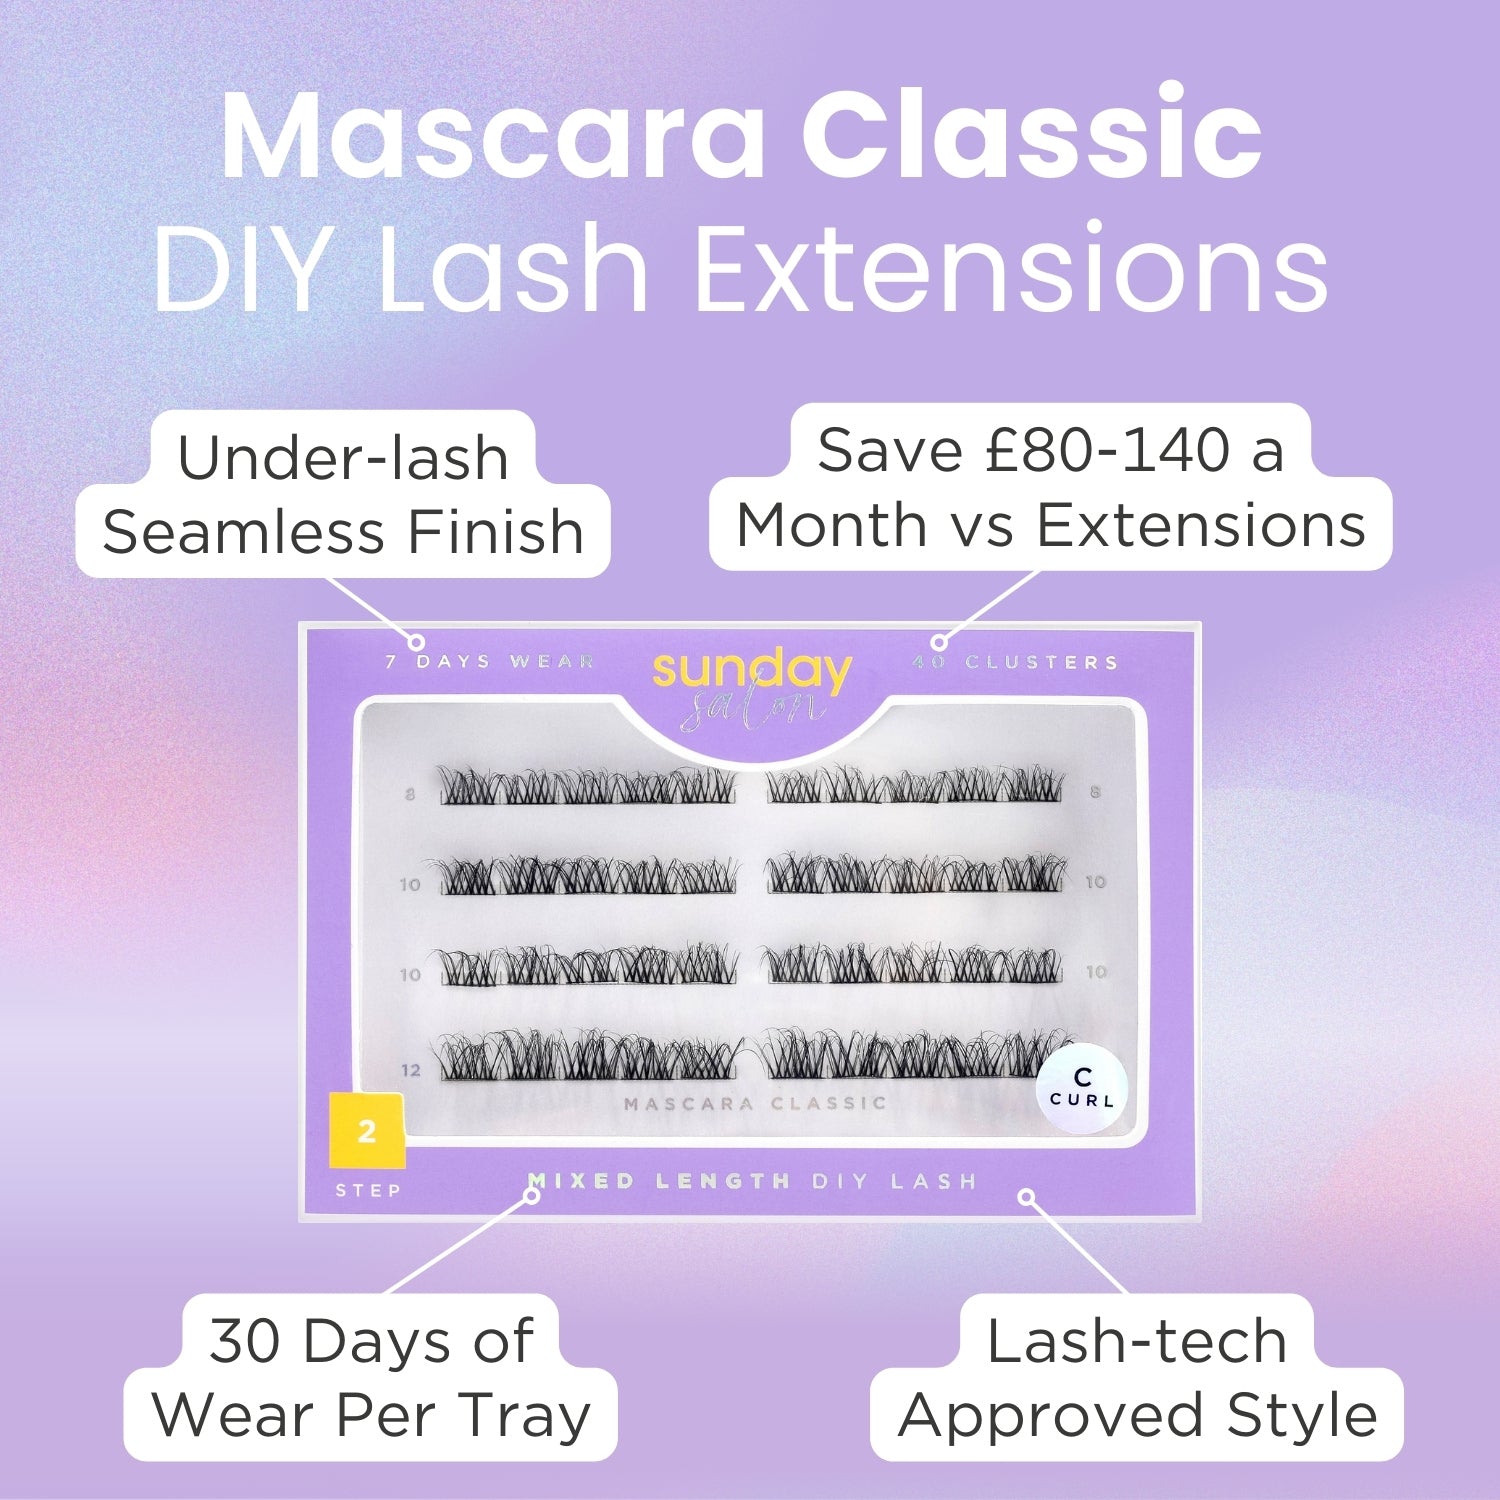 Mascara Classic DIY Lash Extension Kit - Lola's Lashes